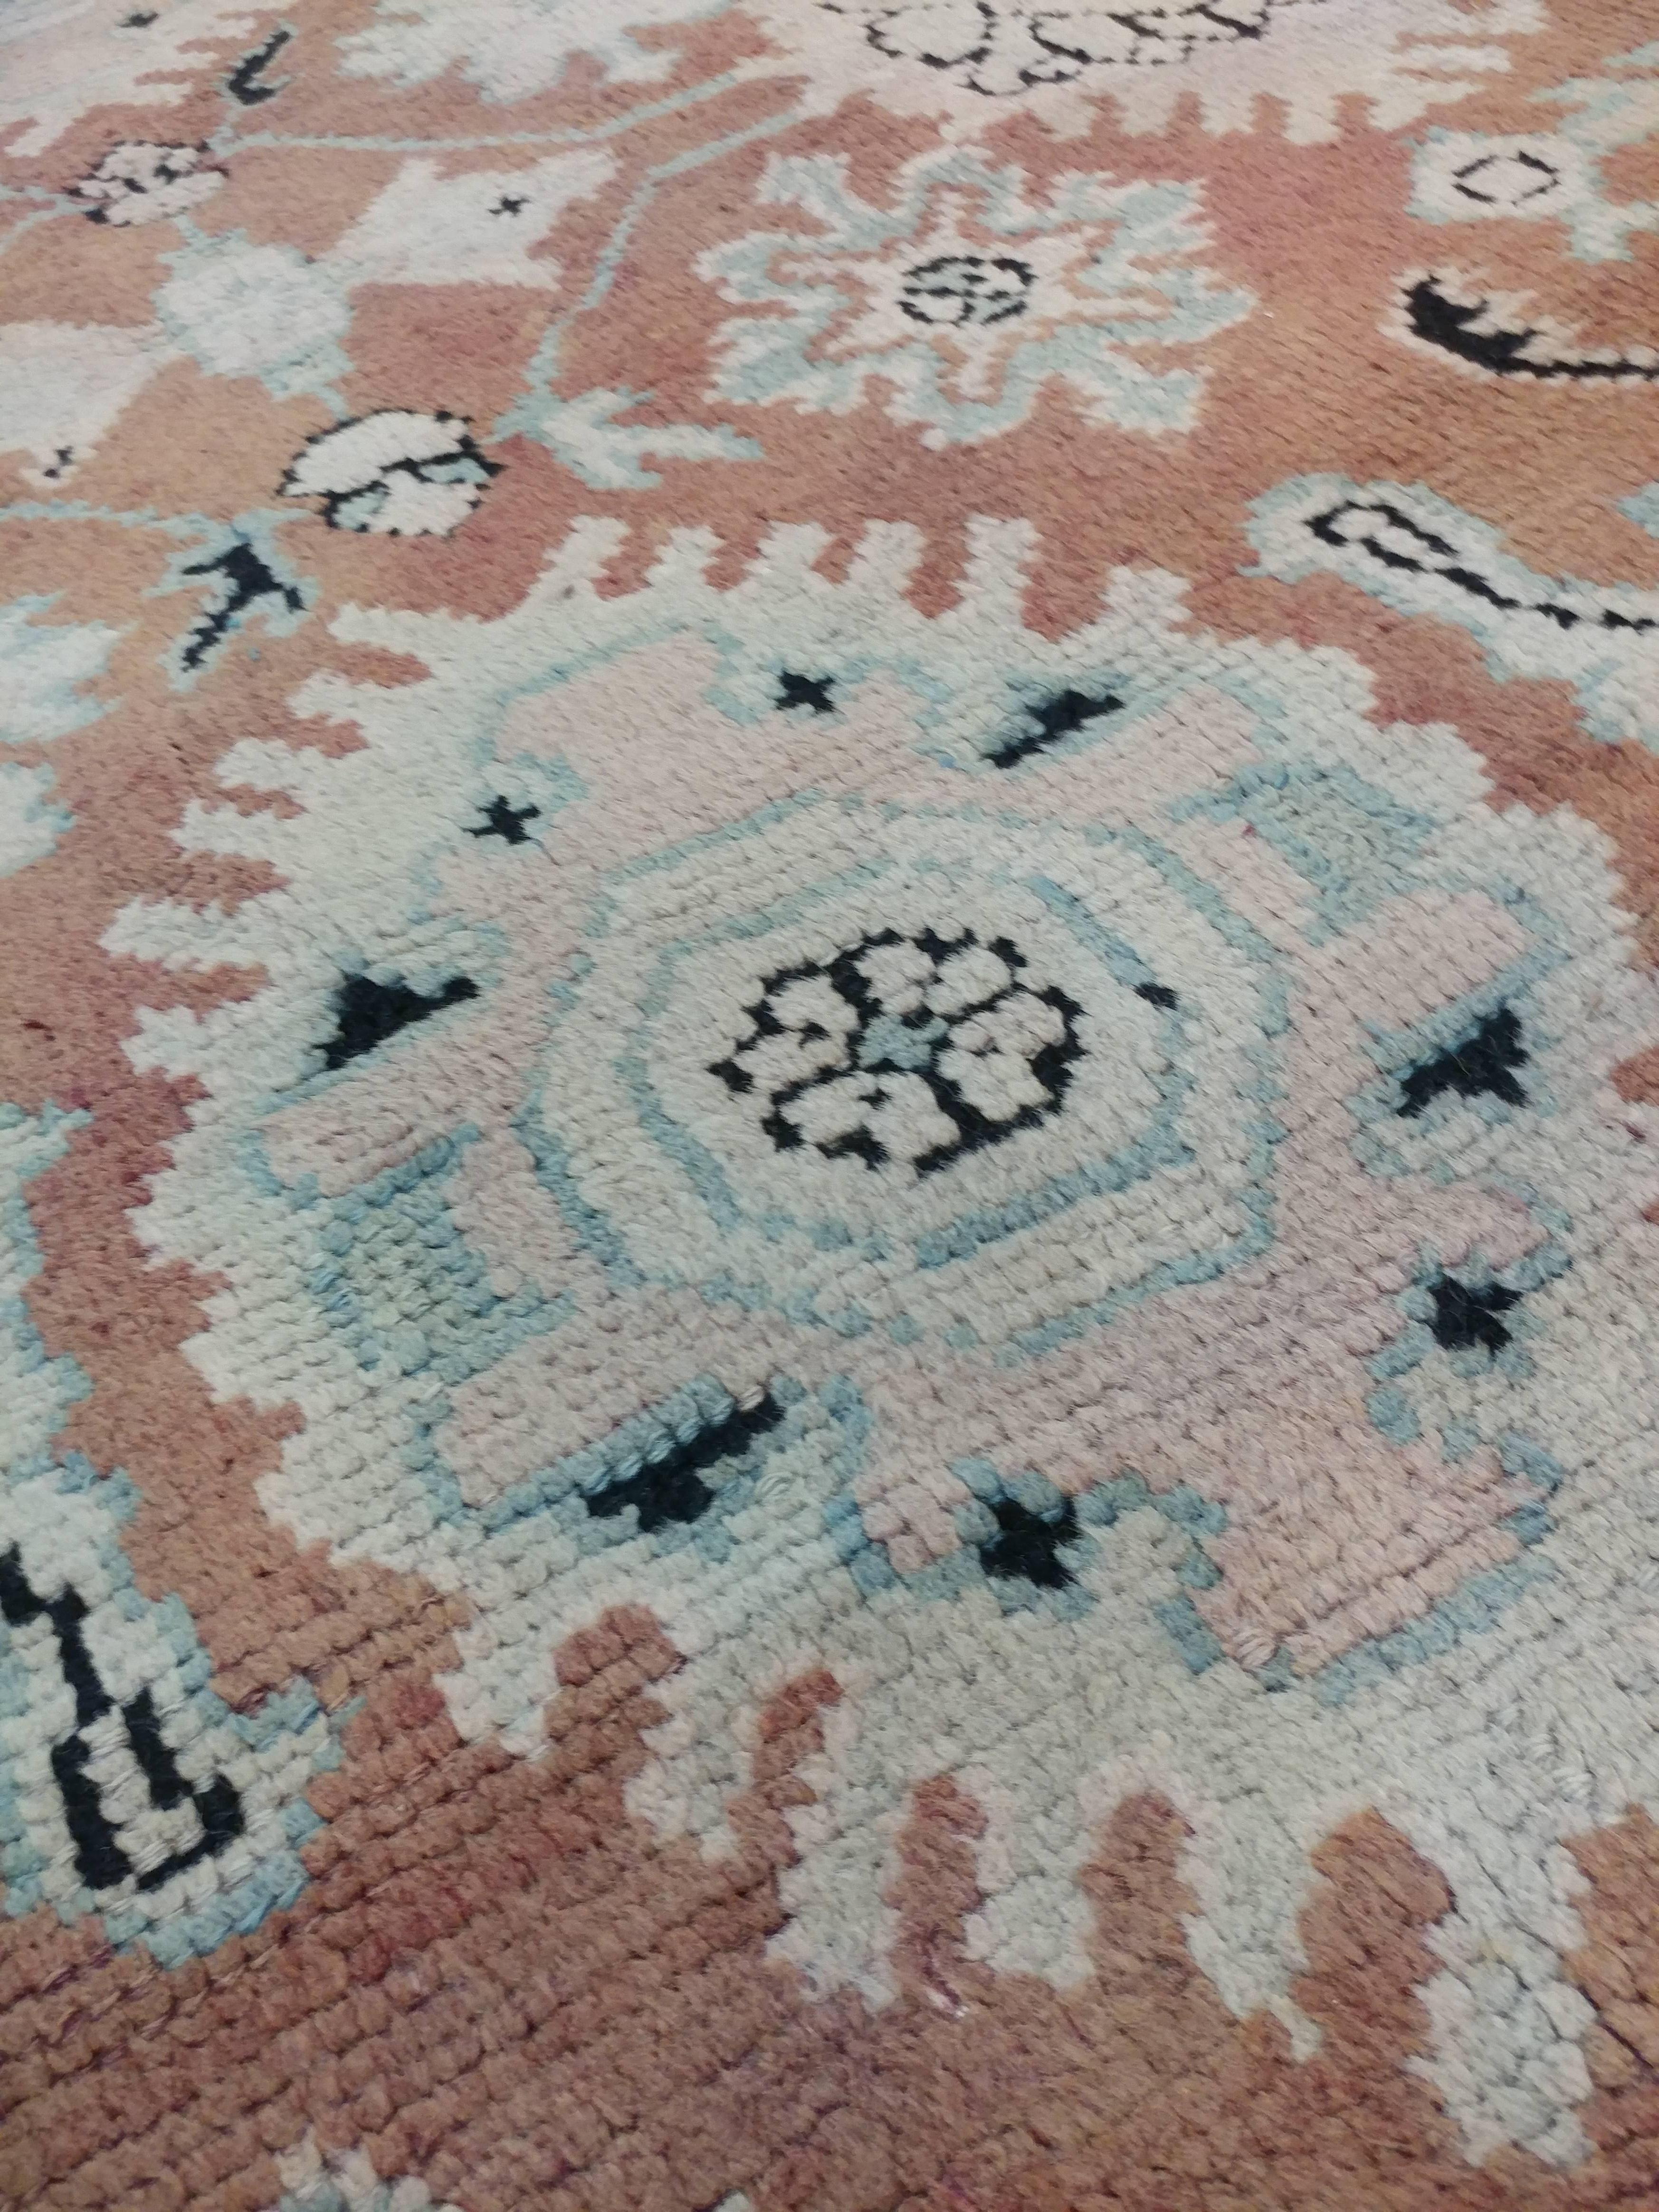 Hand-Knotted Antique Oushak Carpet, Red Carpet, Handmade Carpet, Turkish Carpet, Brown, Green For Sale